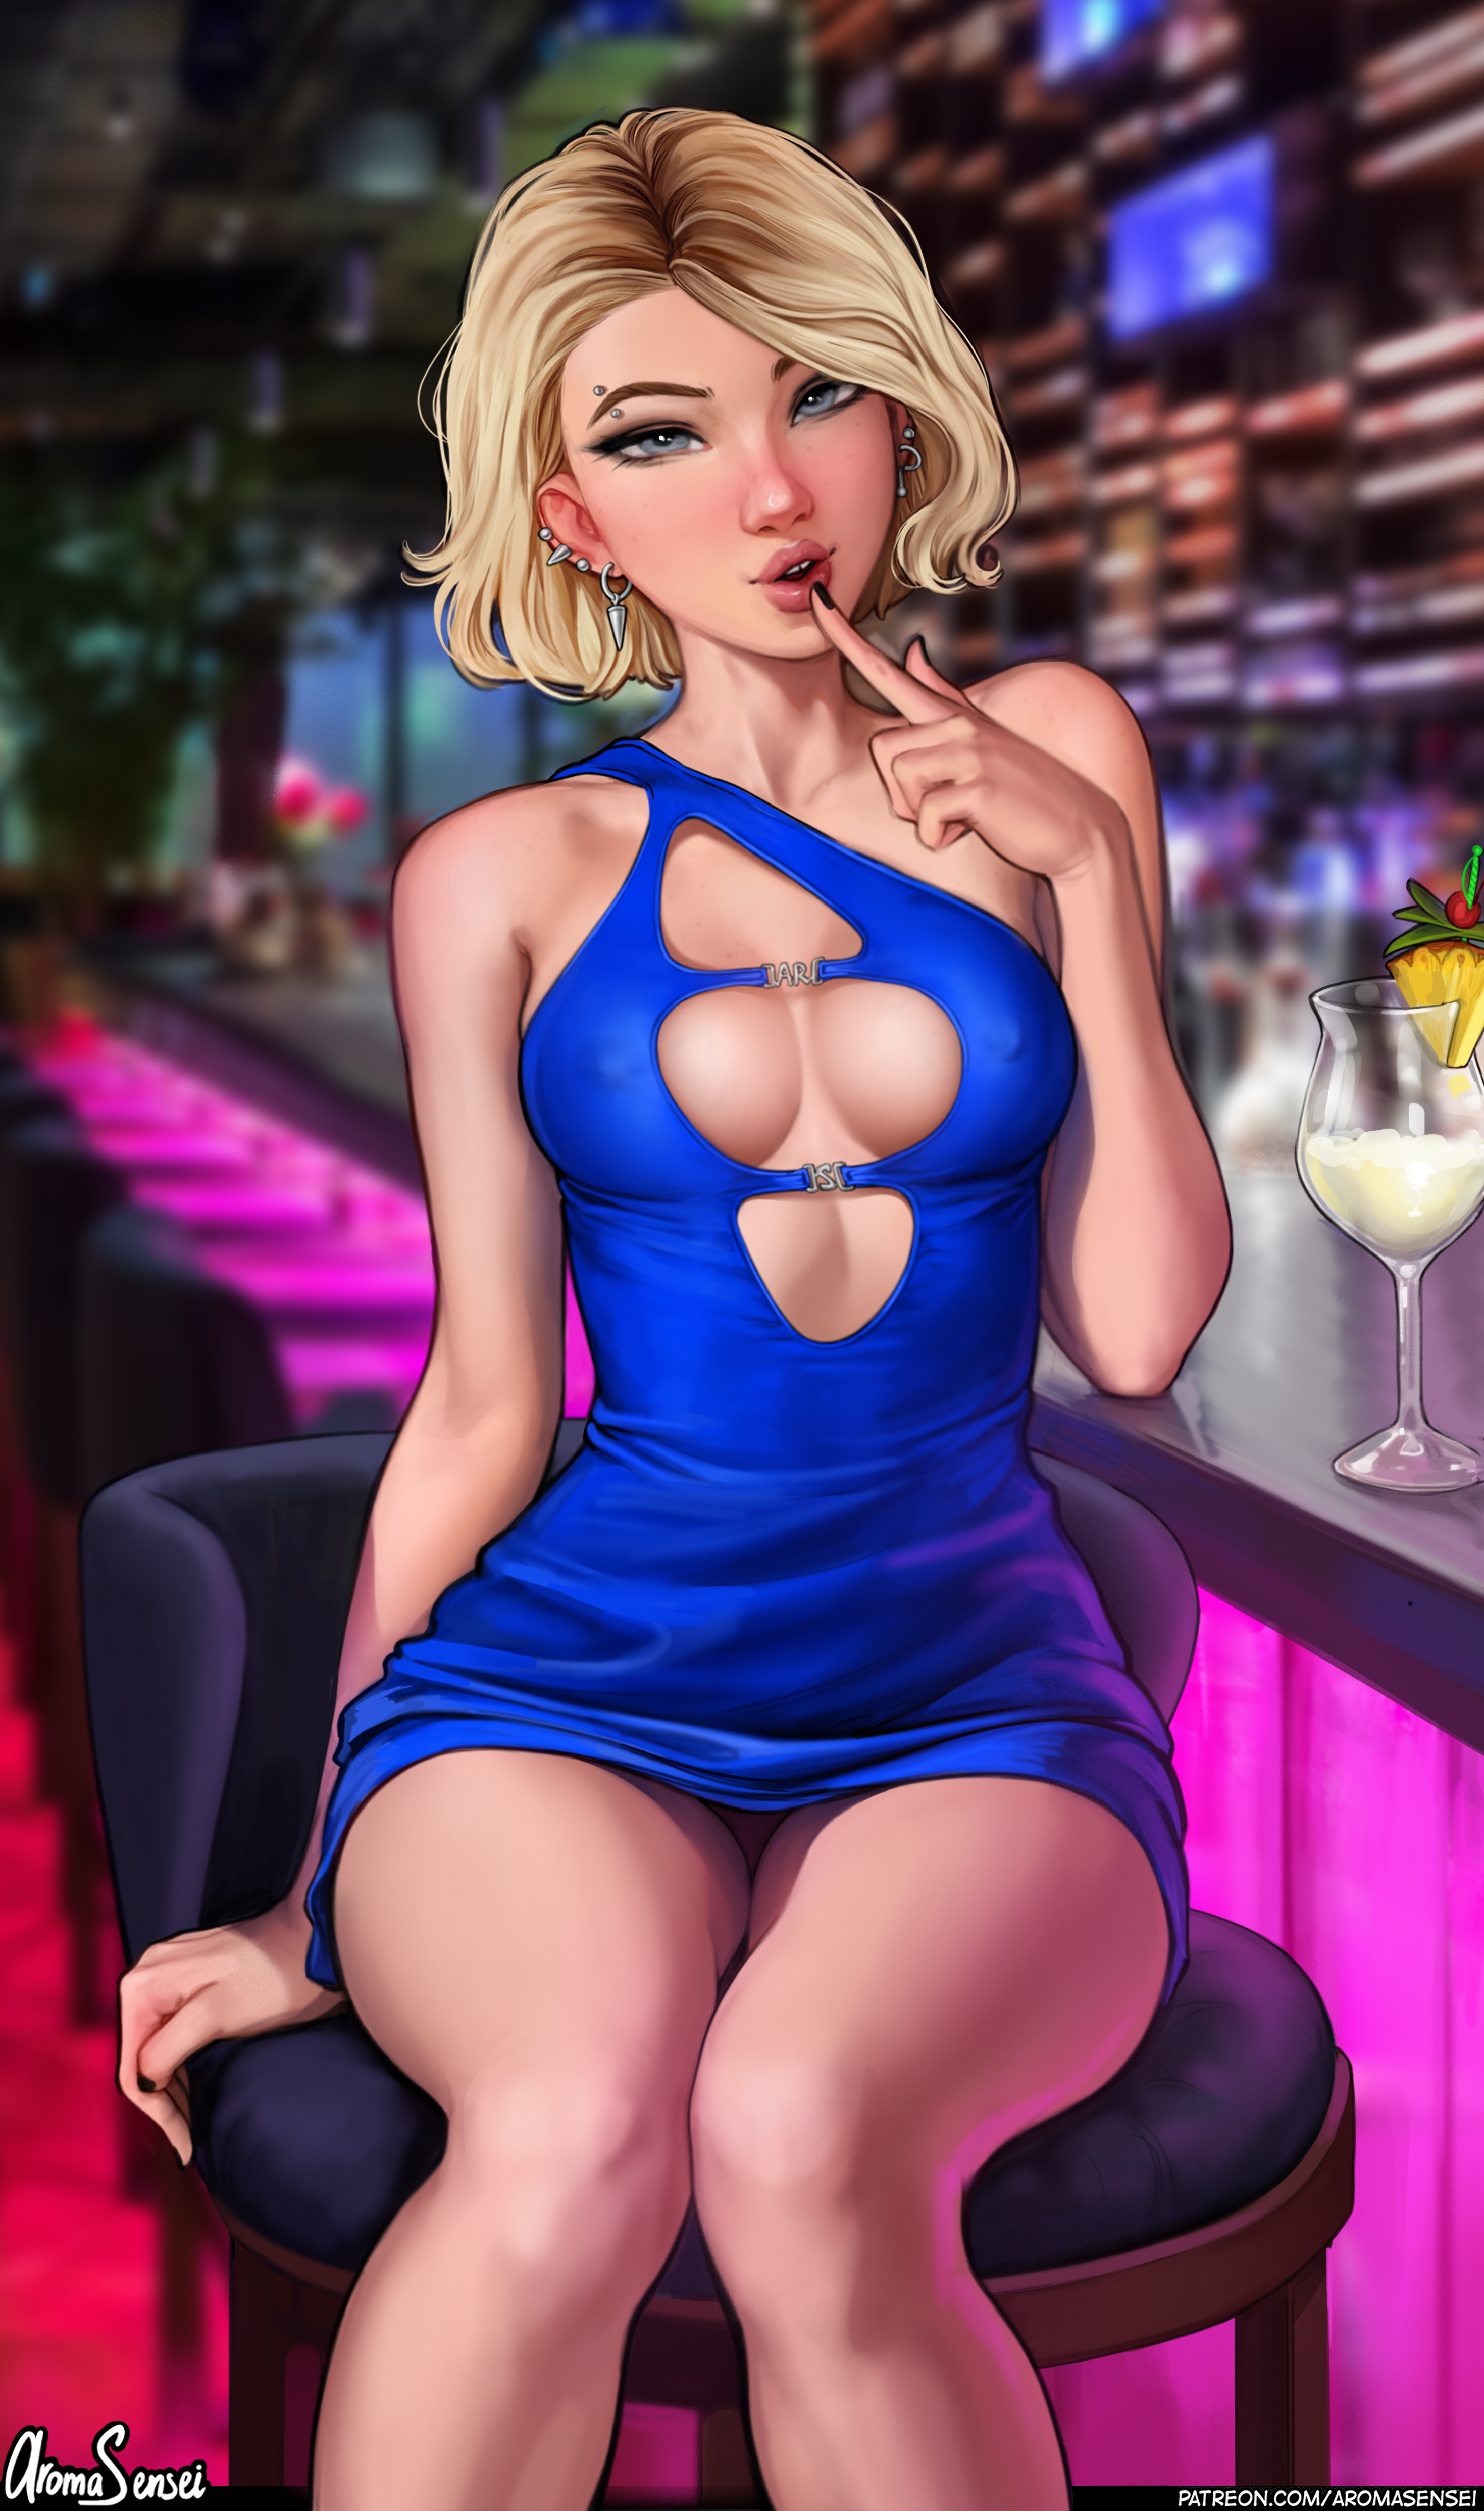 General 2939x4972 Gwen Stacy Marvel Comics fictional character bar blonde dress blue dress cleavage no bra upskirt 2D artwork drawing fan art Aroma Sensei nipple bulge